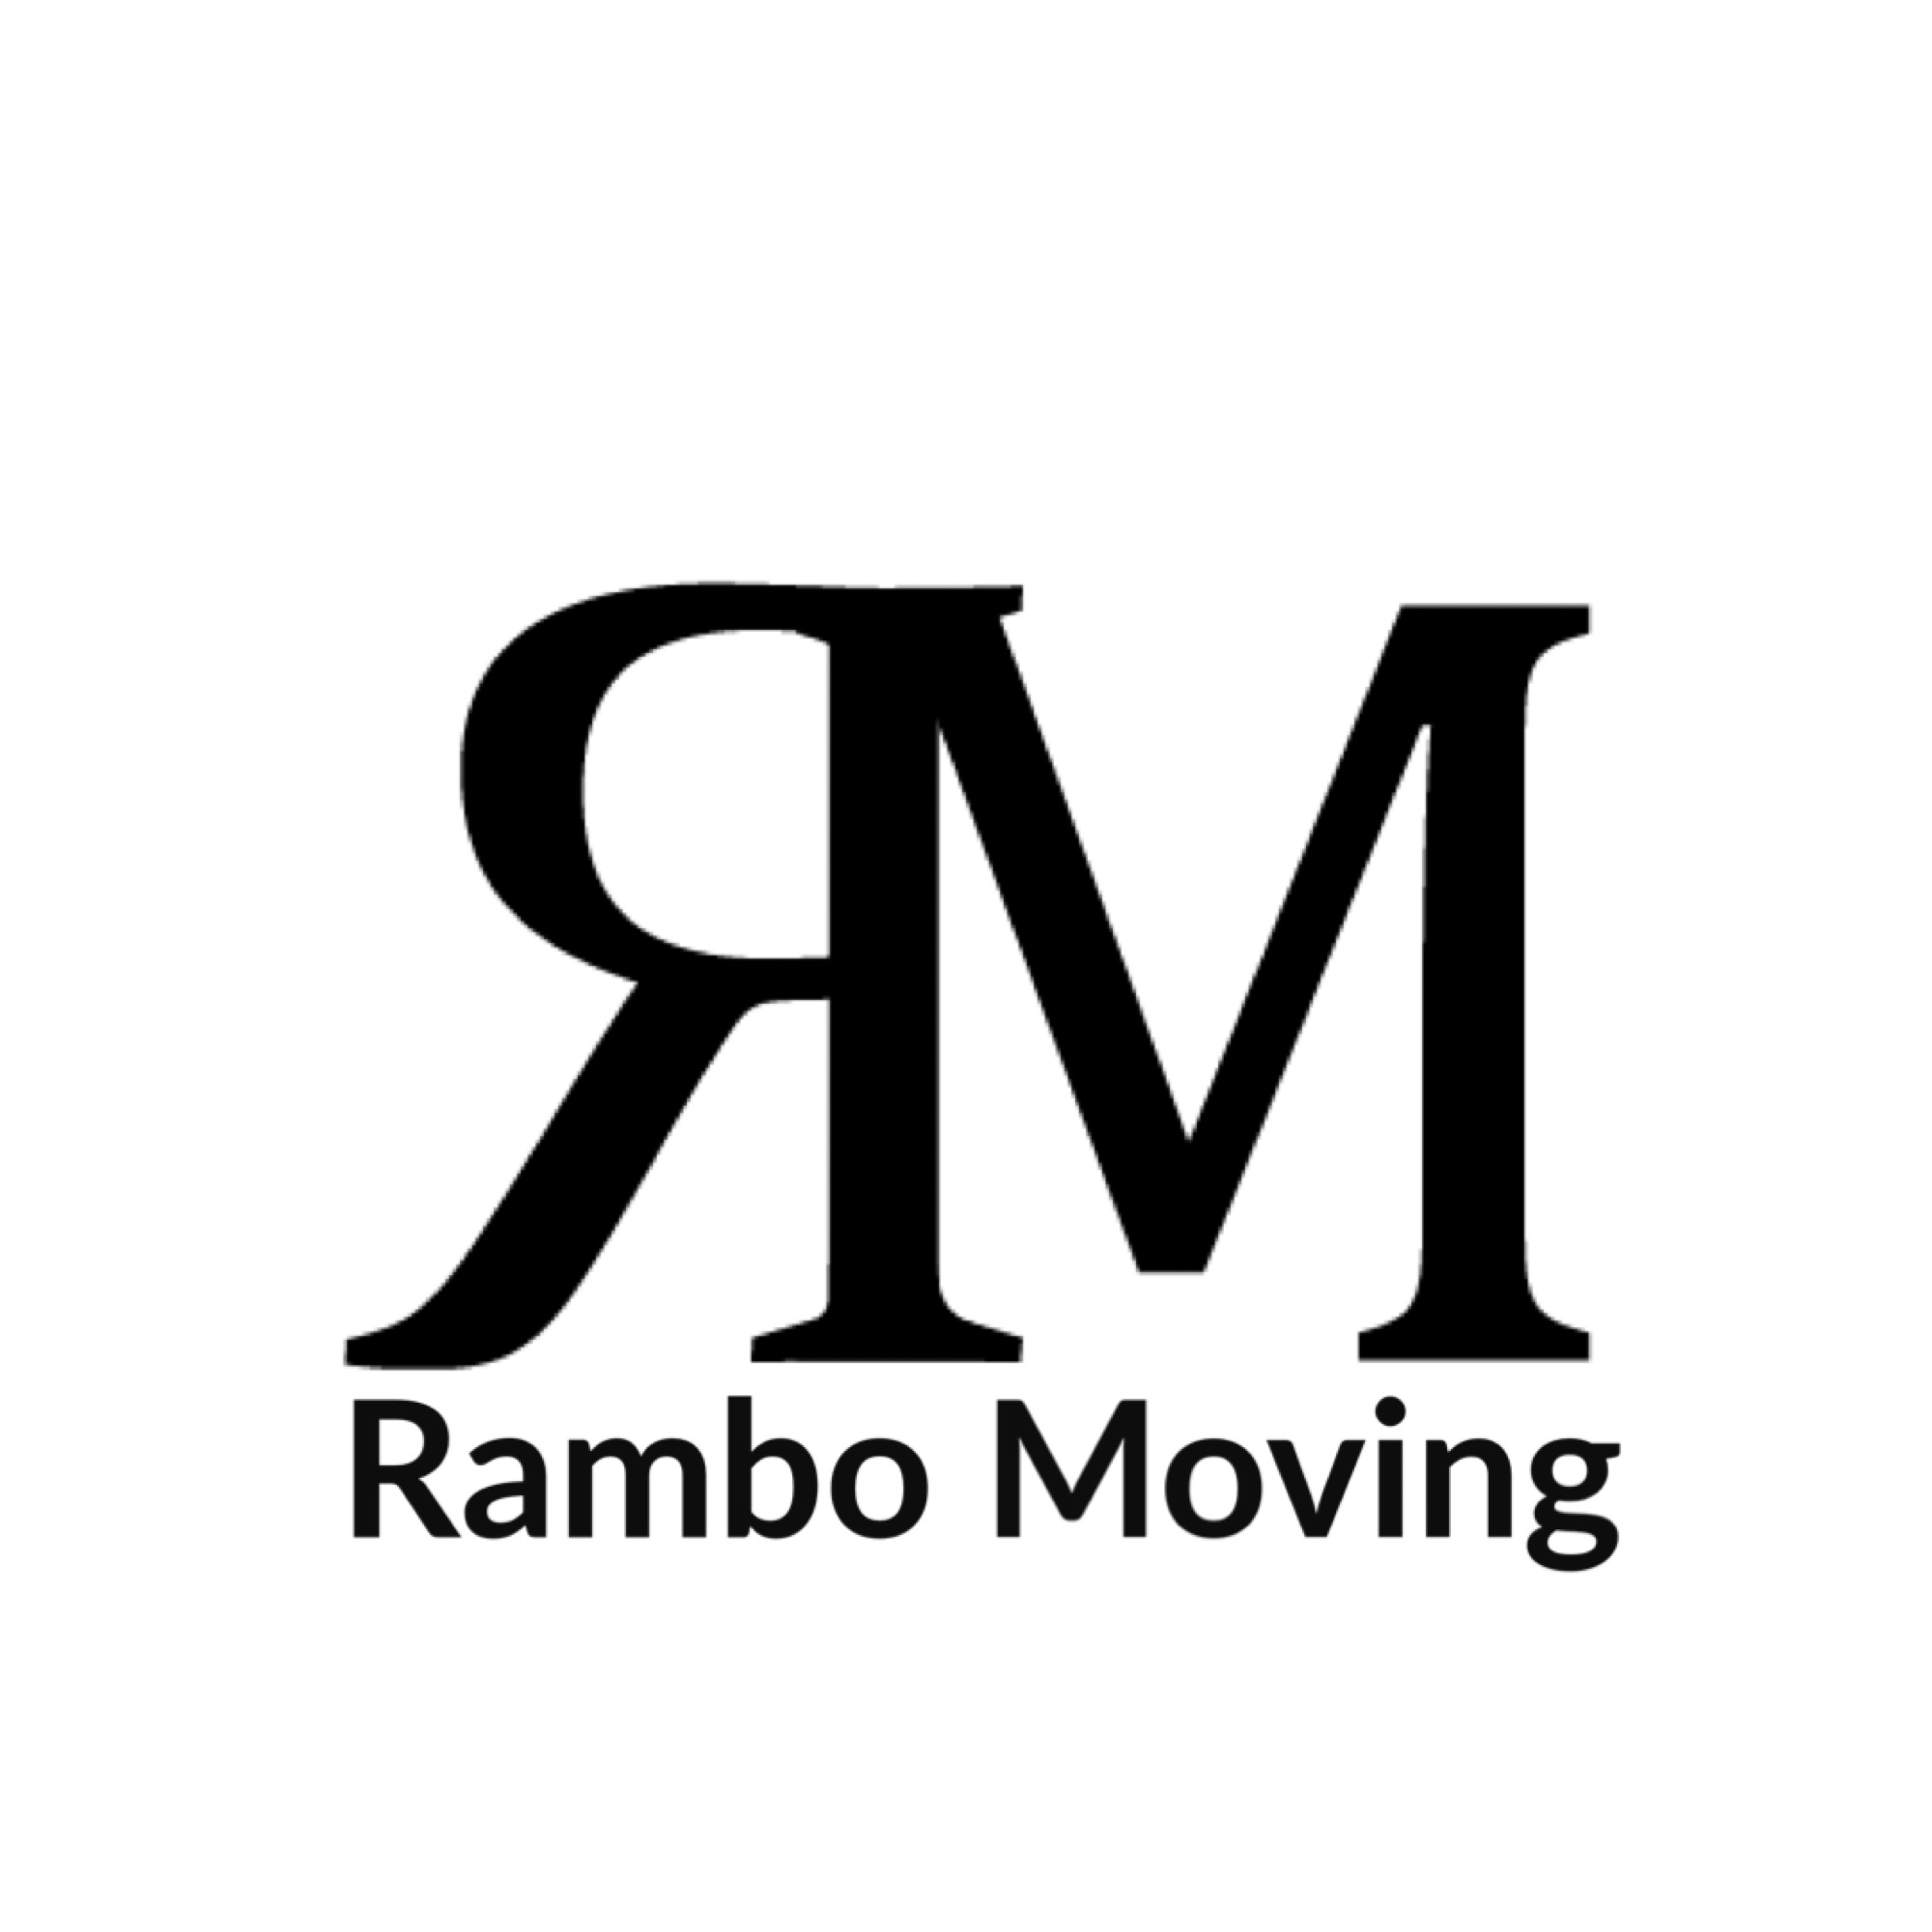 Rambo Moving Services Logo